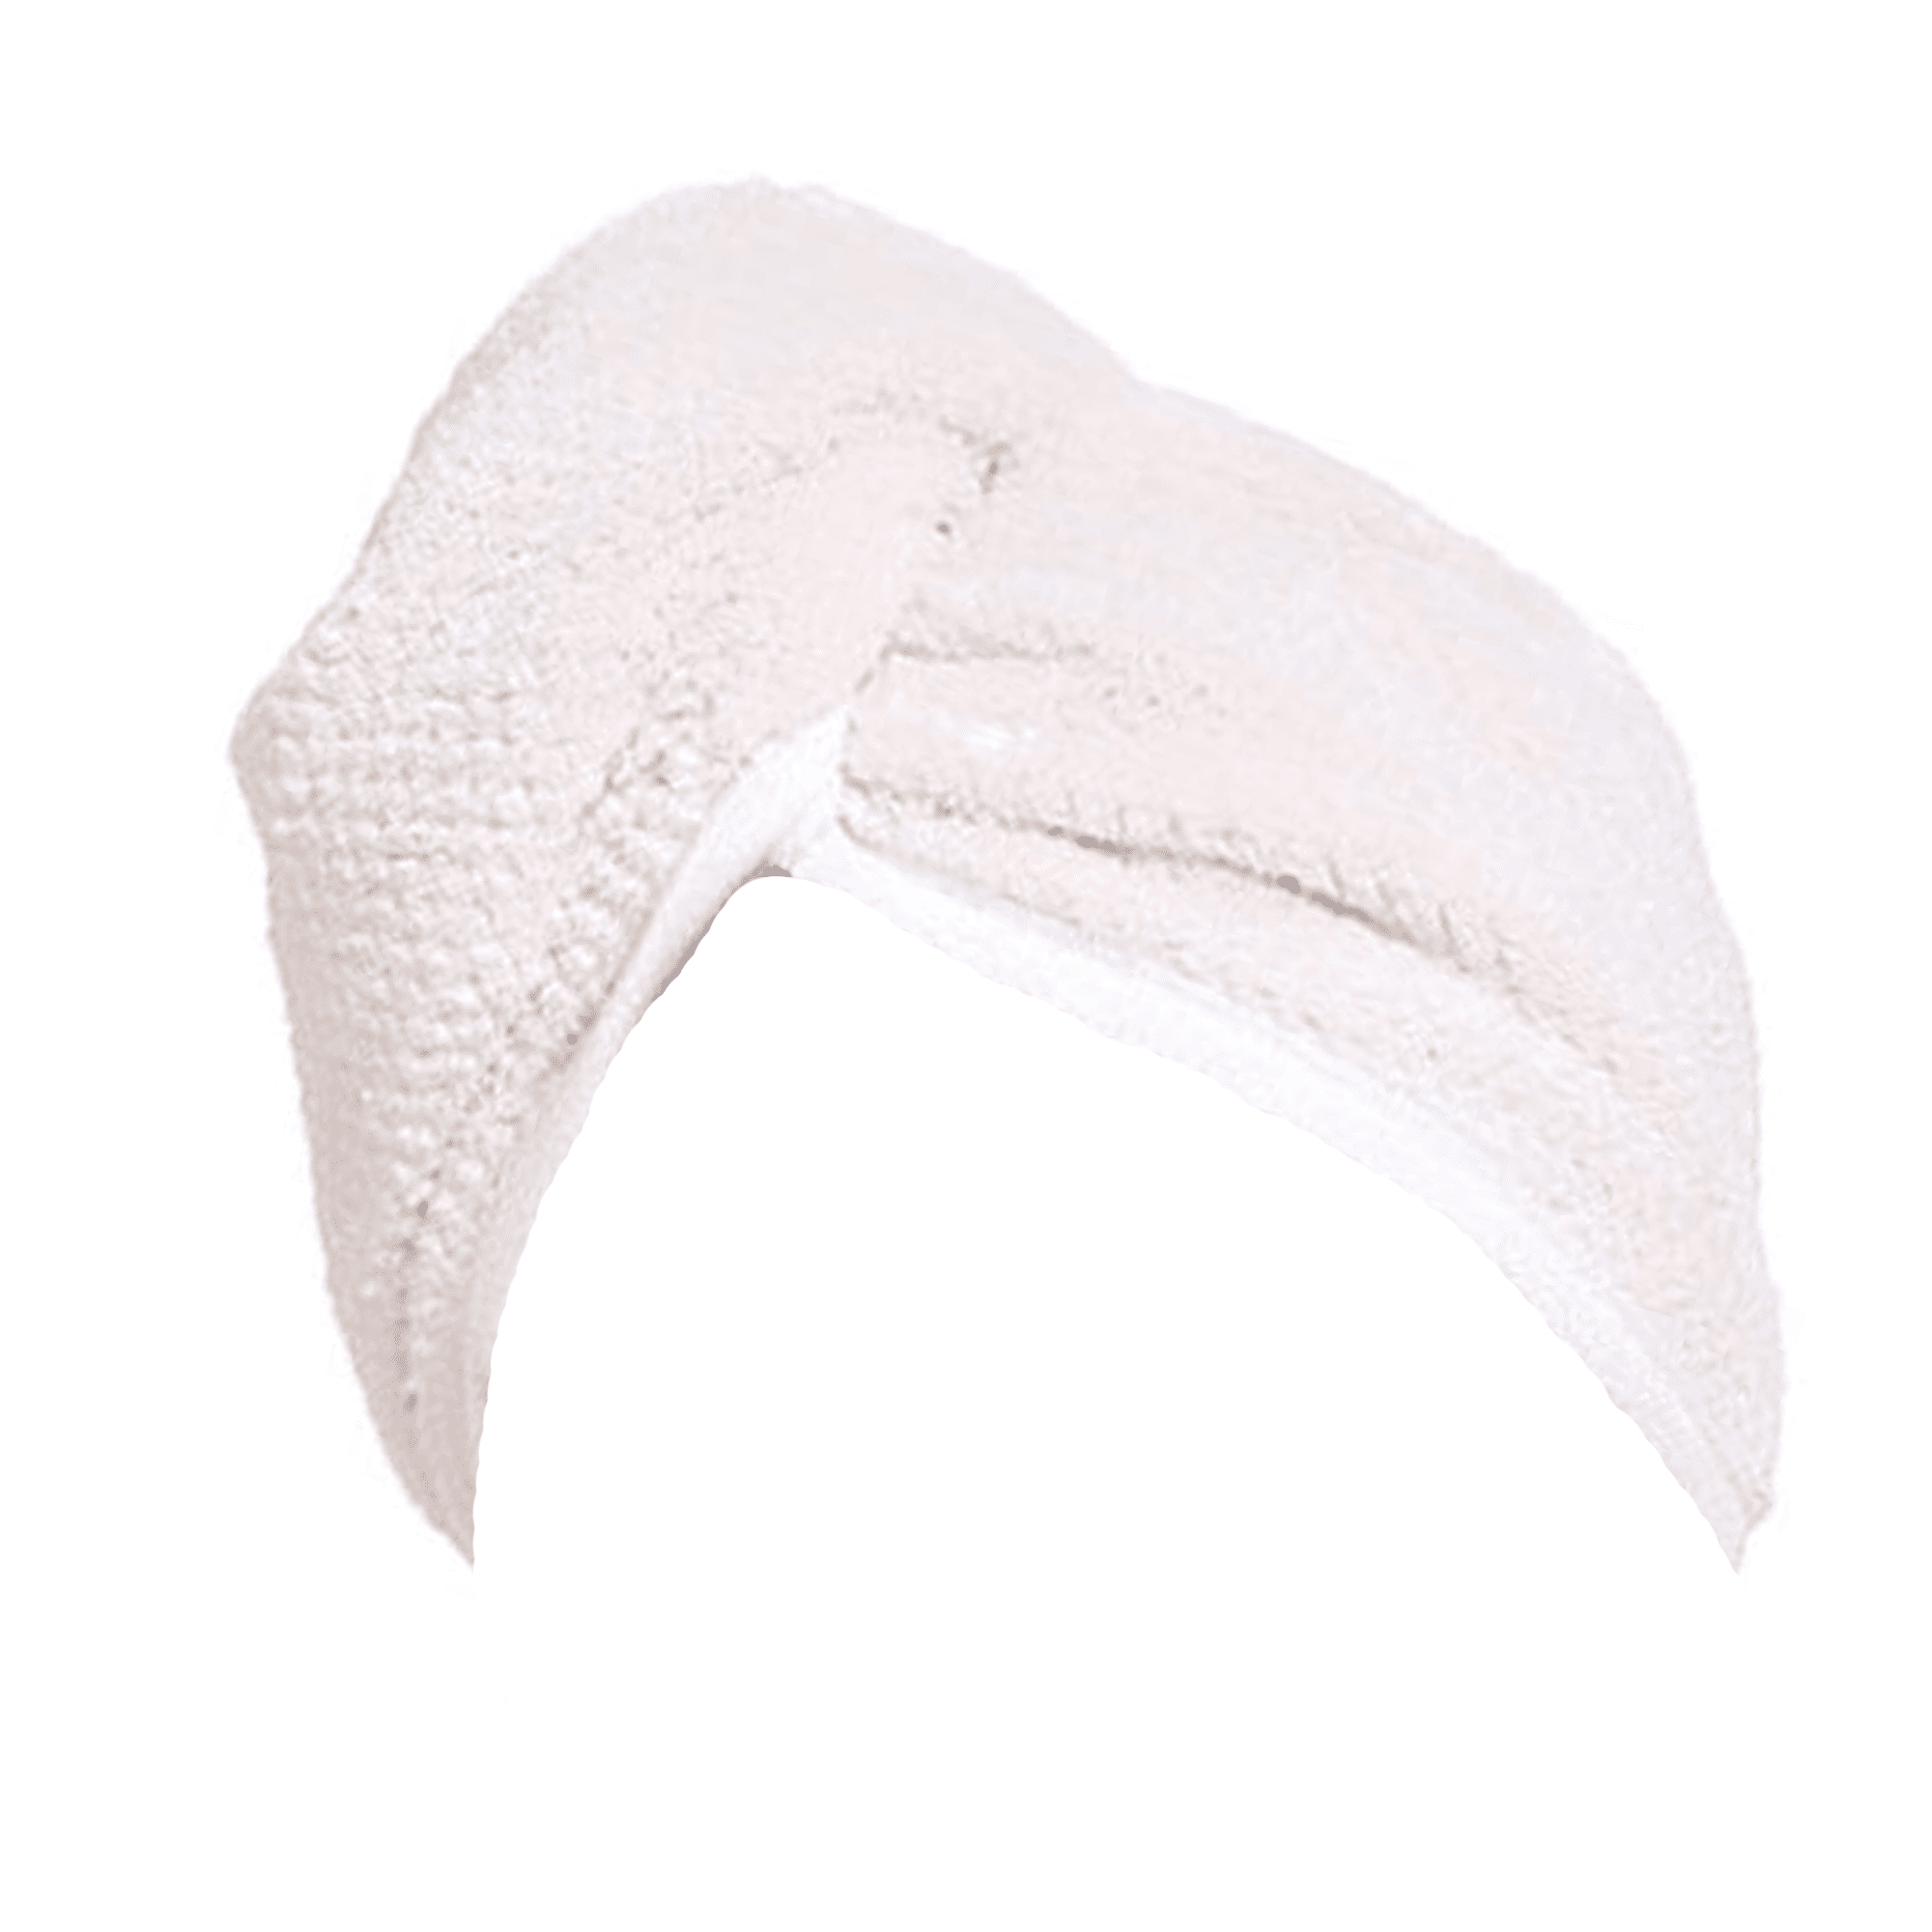 Hair Towel Twist Dry Shower Microfiber Drying Bath Spa Head Cap Hat Turban Women 